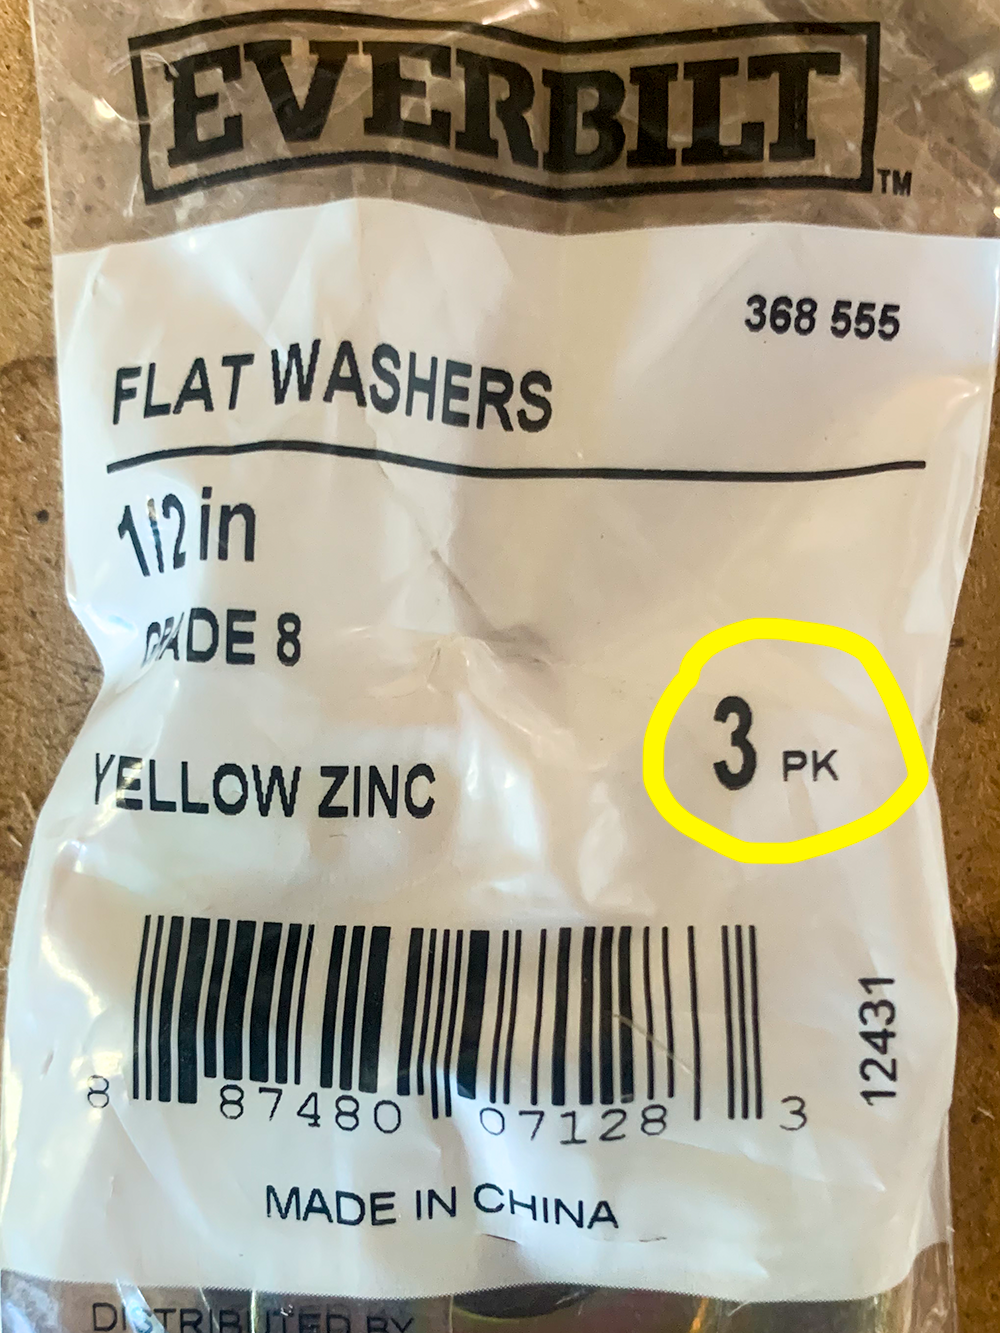 Why three washers?